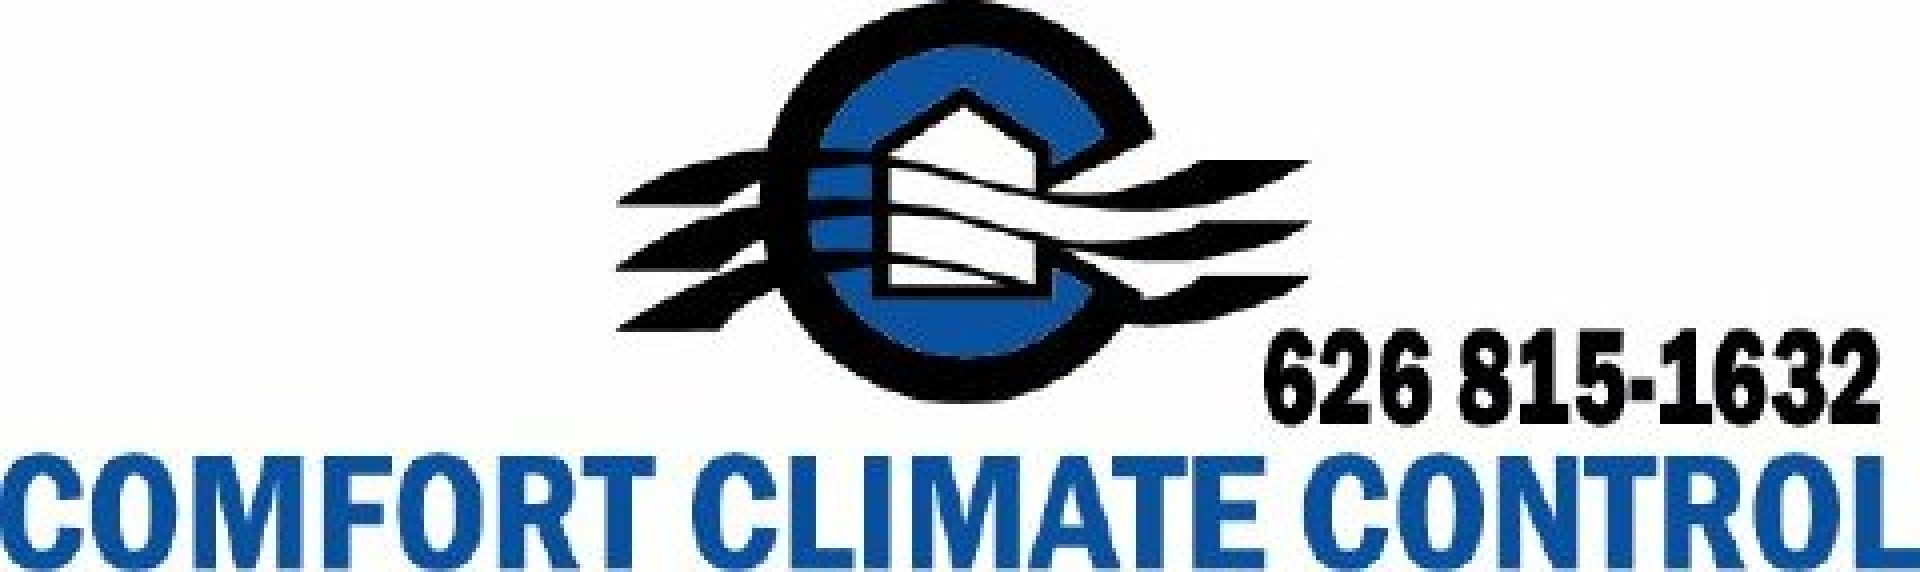 Comfort Climate Control Logo